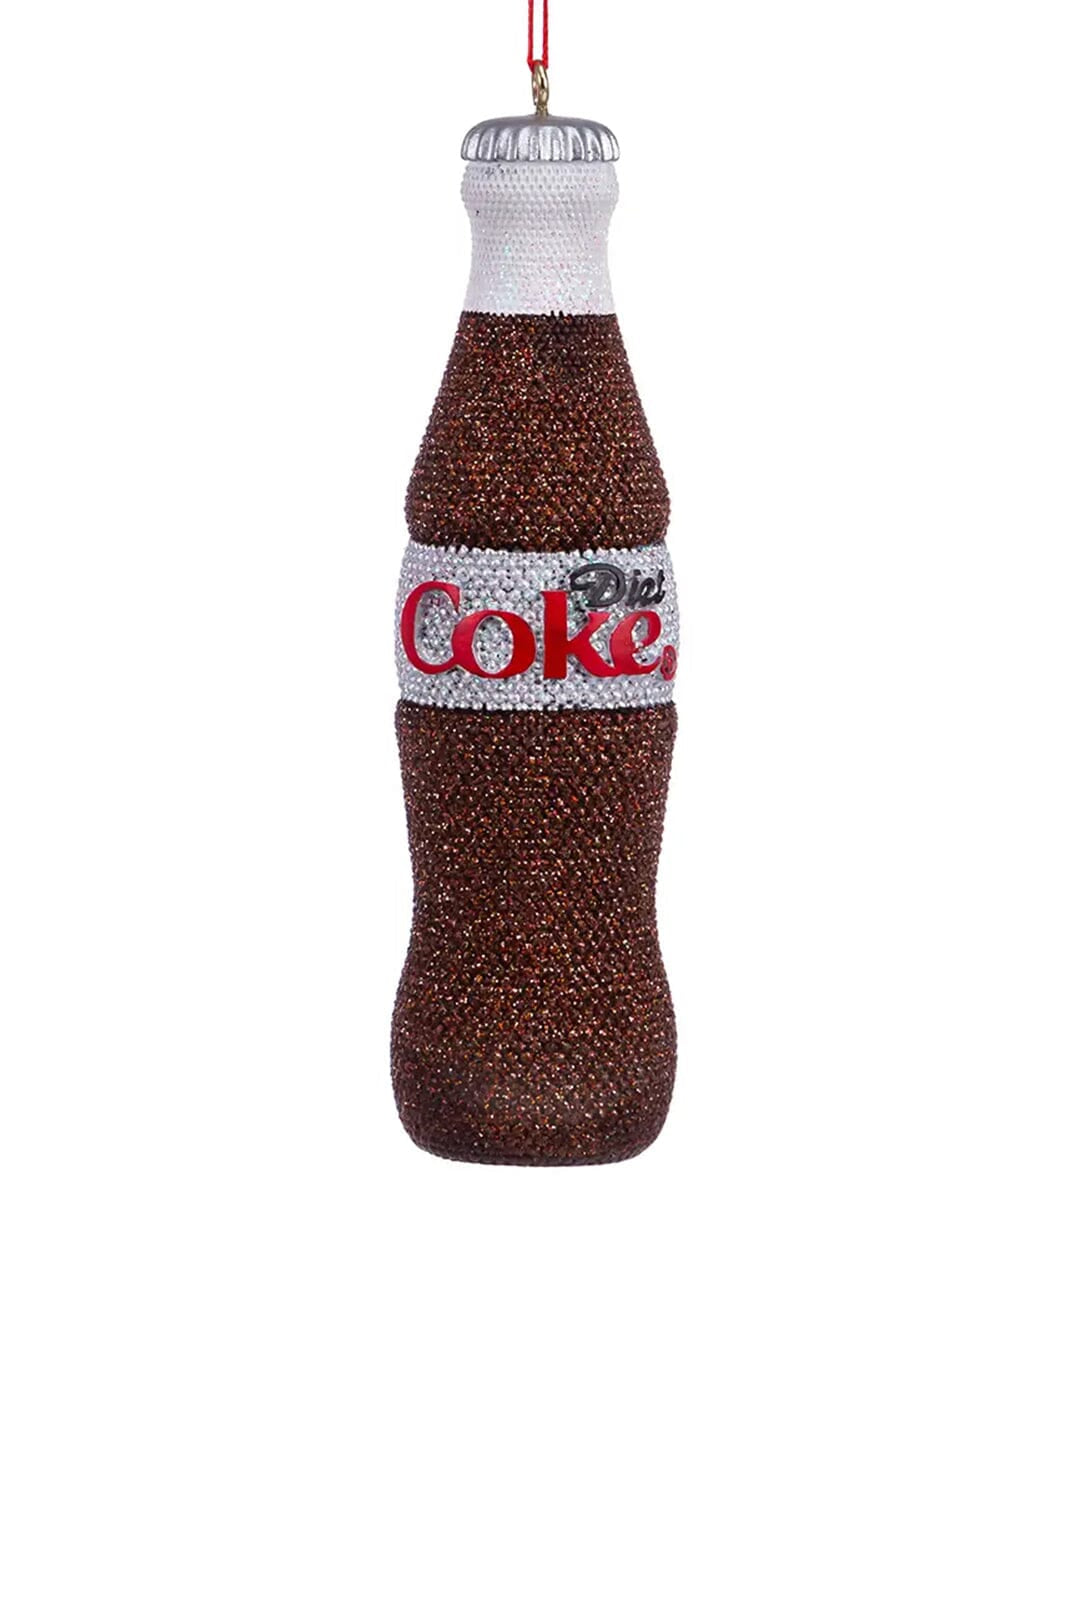 4" Dazzled Diet Coke Bottle Ornament - -